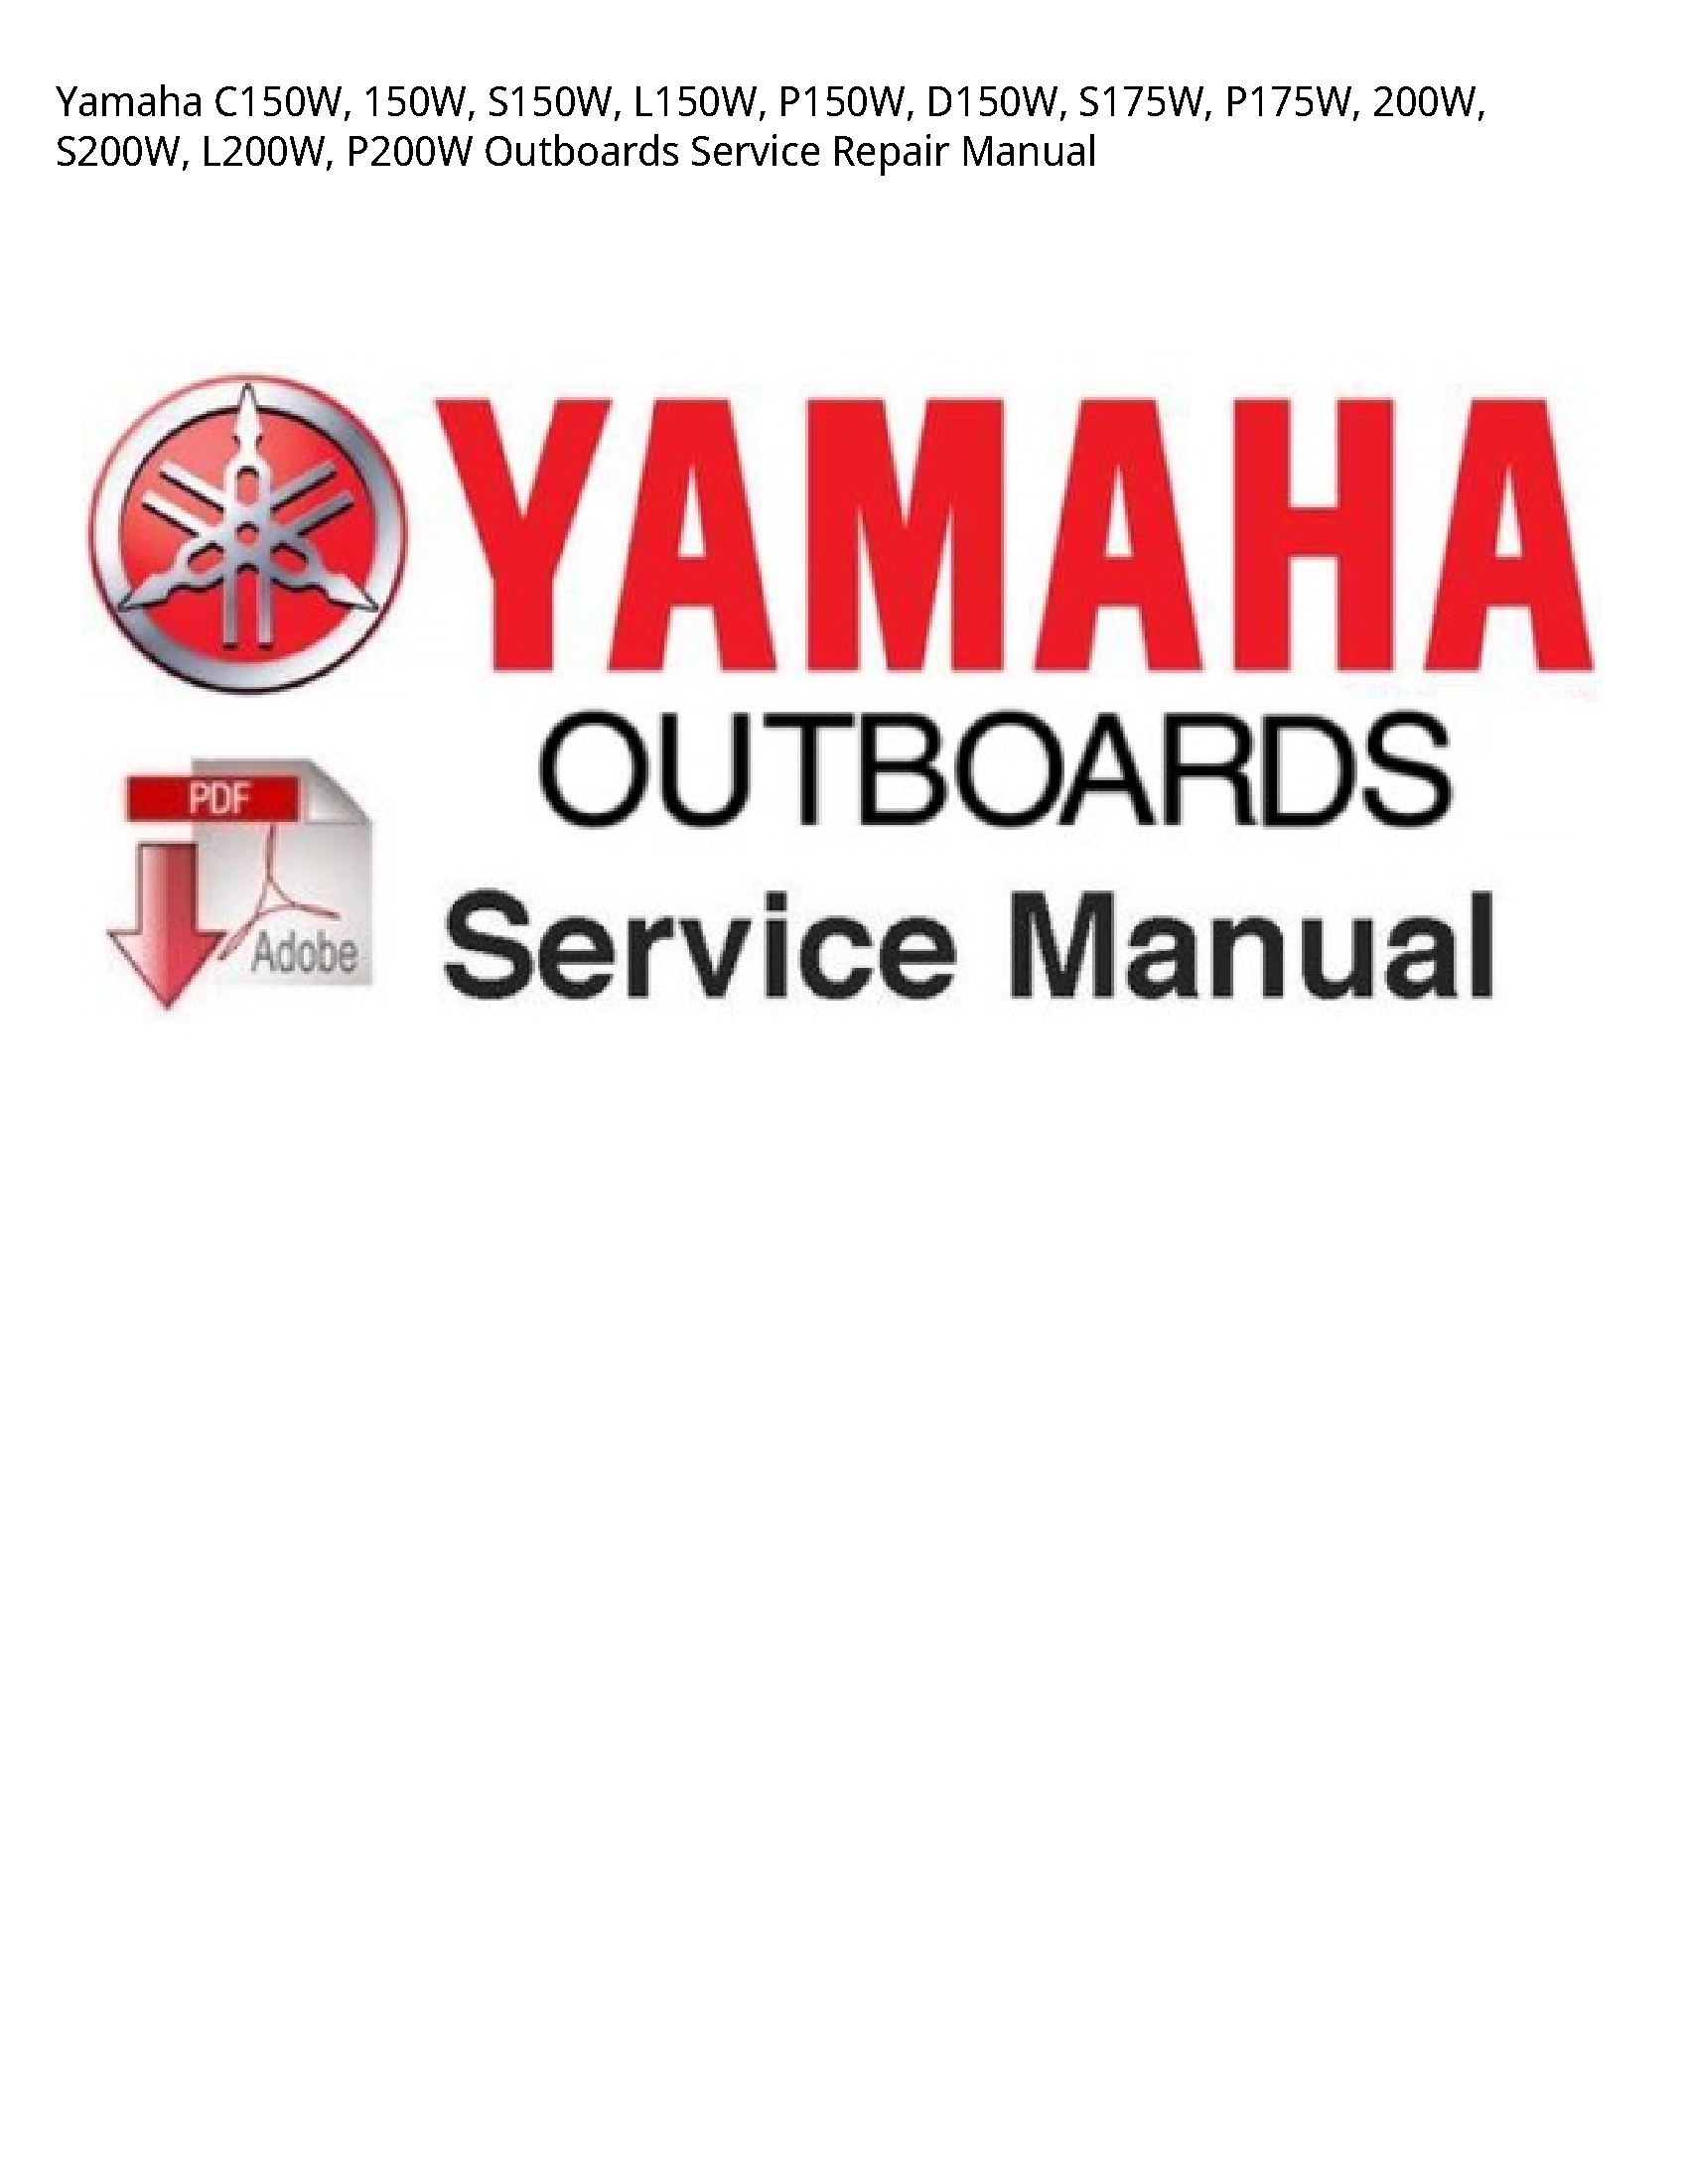 Yamaha C150W Outboards manual